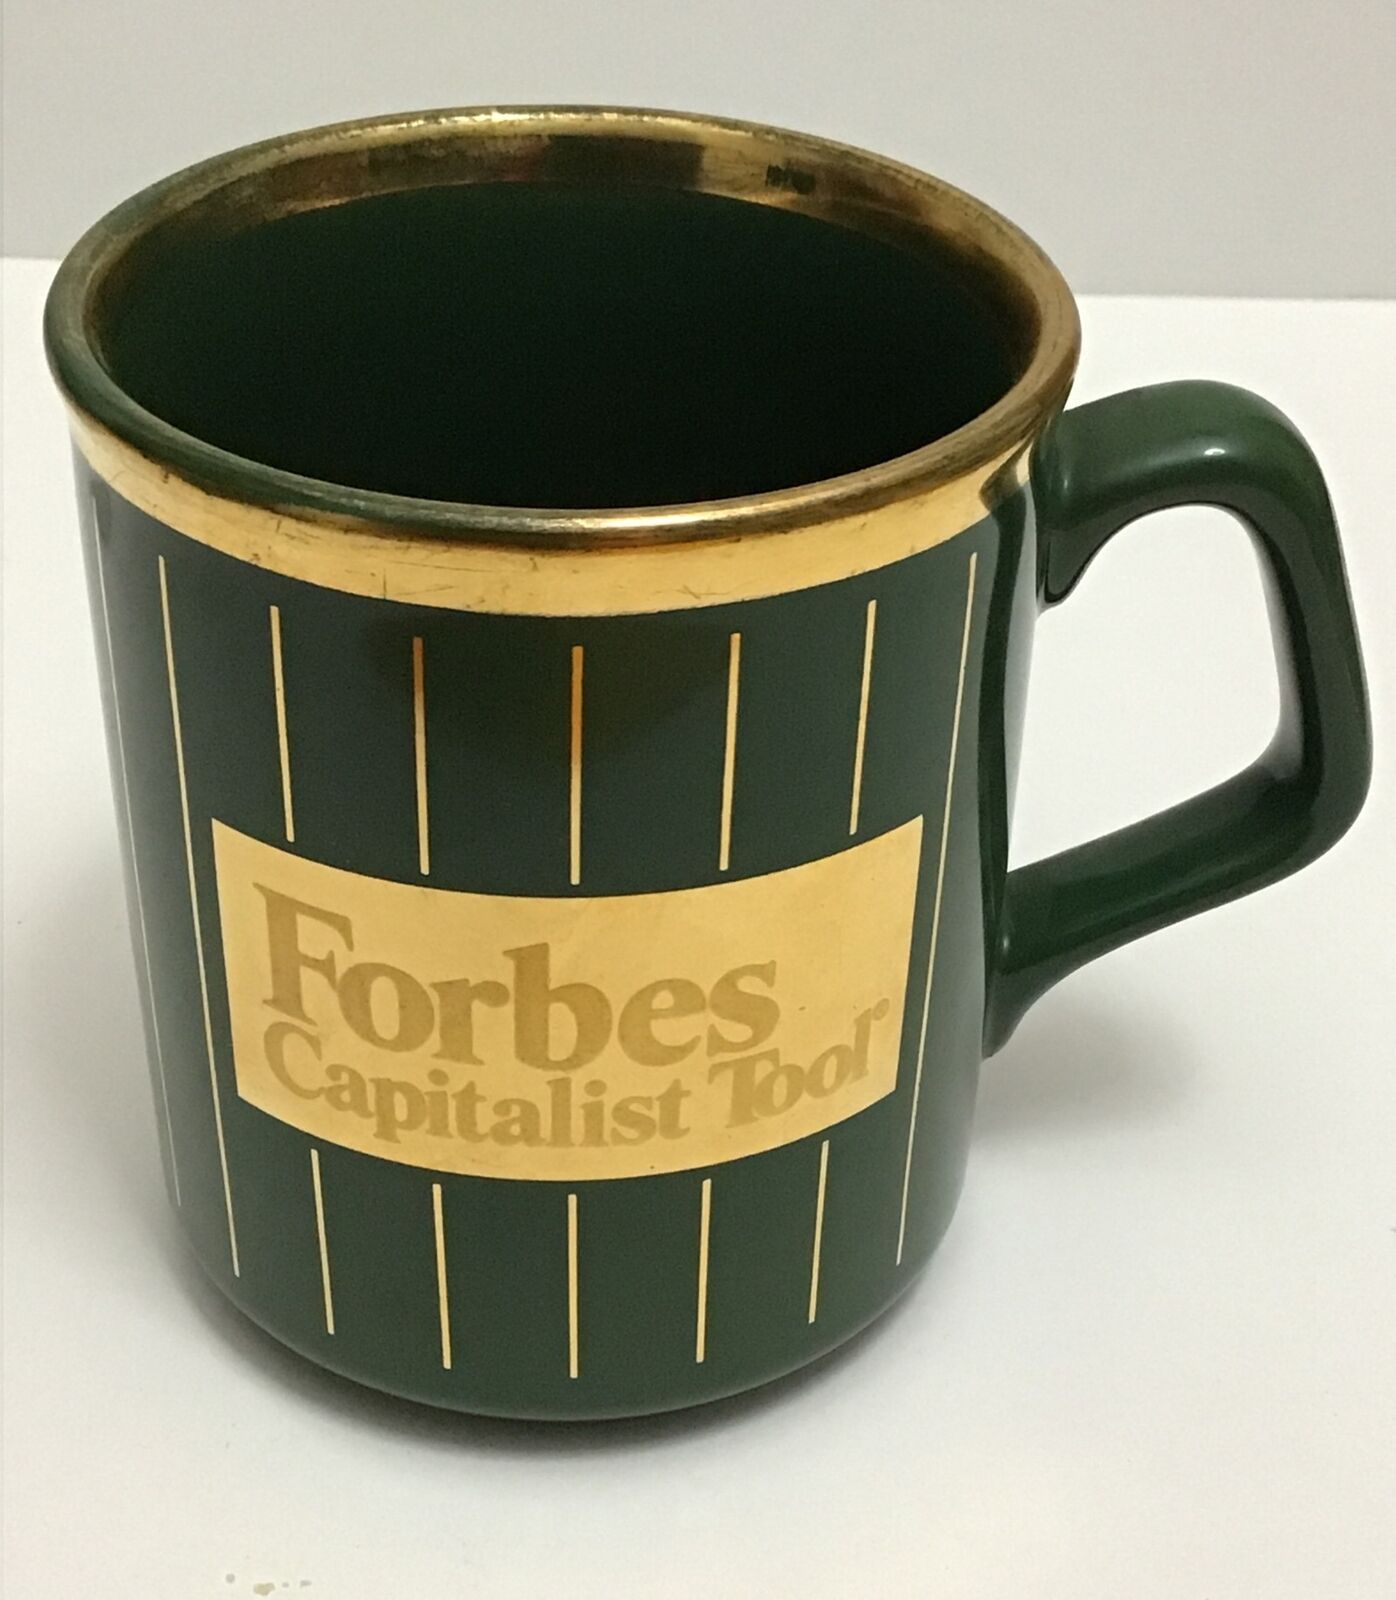 Vintage Rare Malcolm FORBES CAPITALIST TOOL Green & Gold Coffee Mug Cup